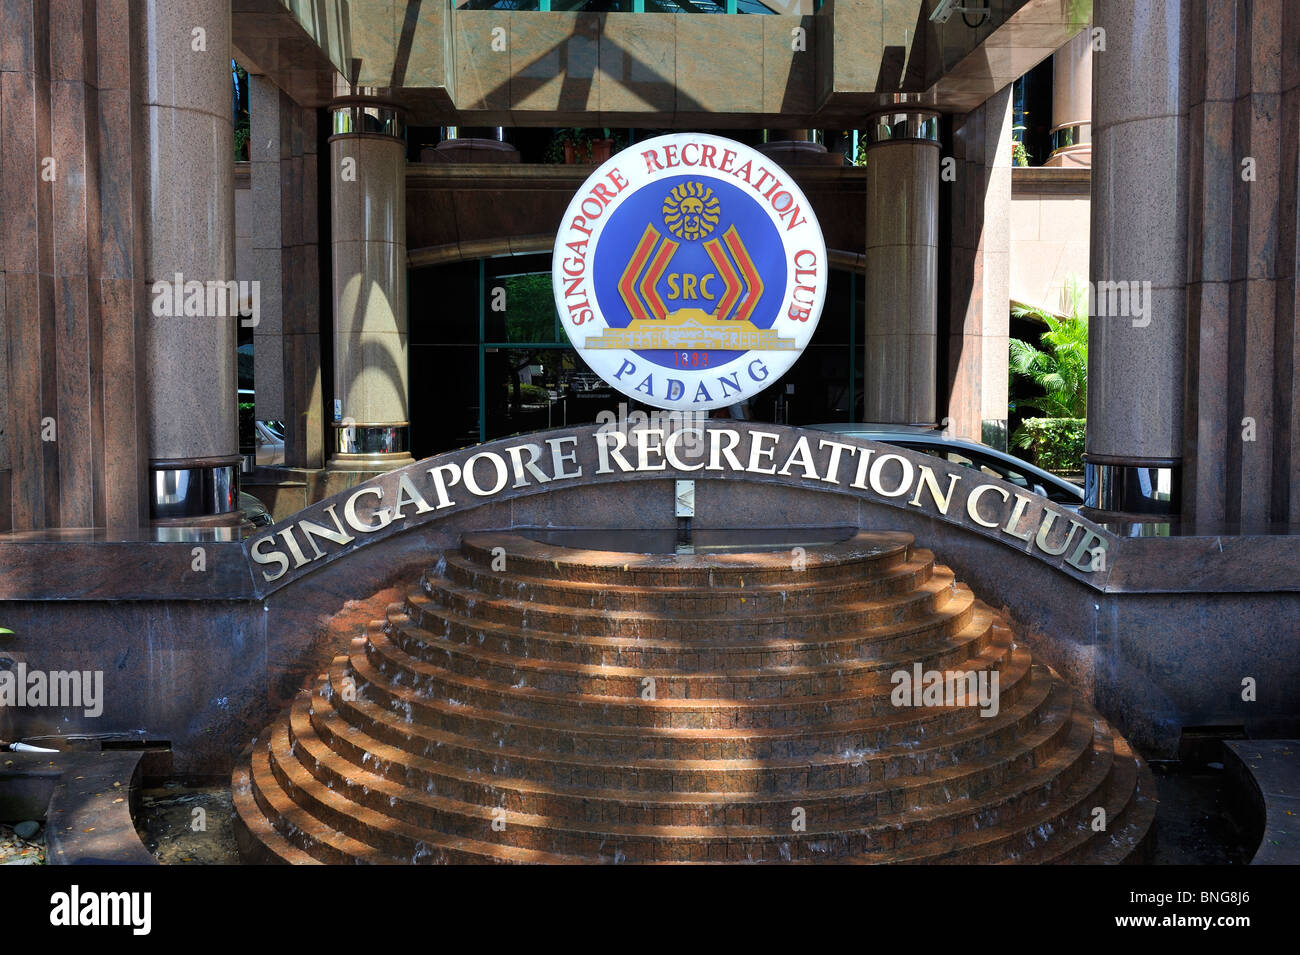 Entrance tot he Singapore Recreation Club, Central Padang, Singapore Stock Photo